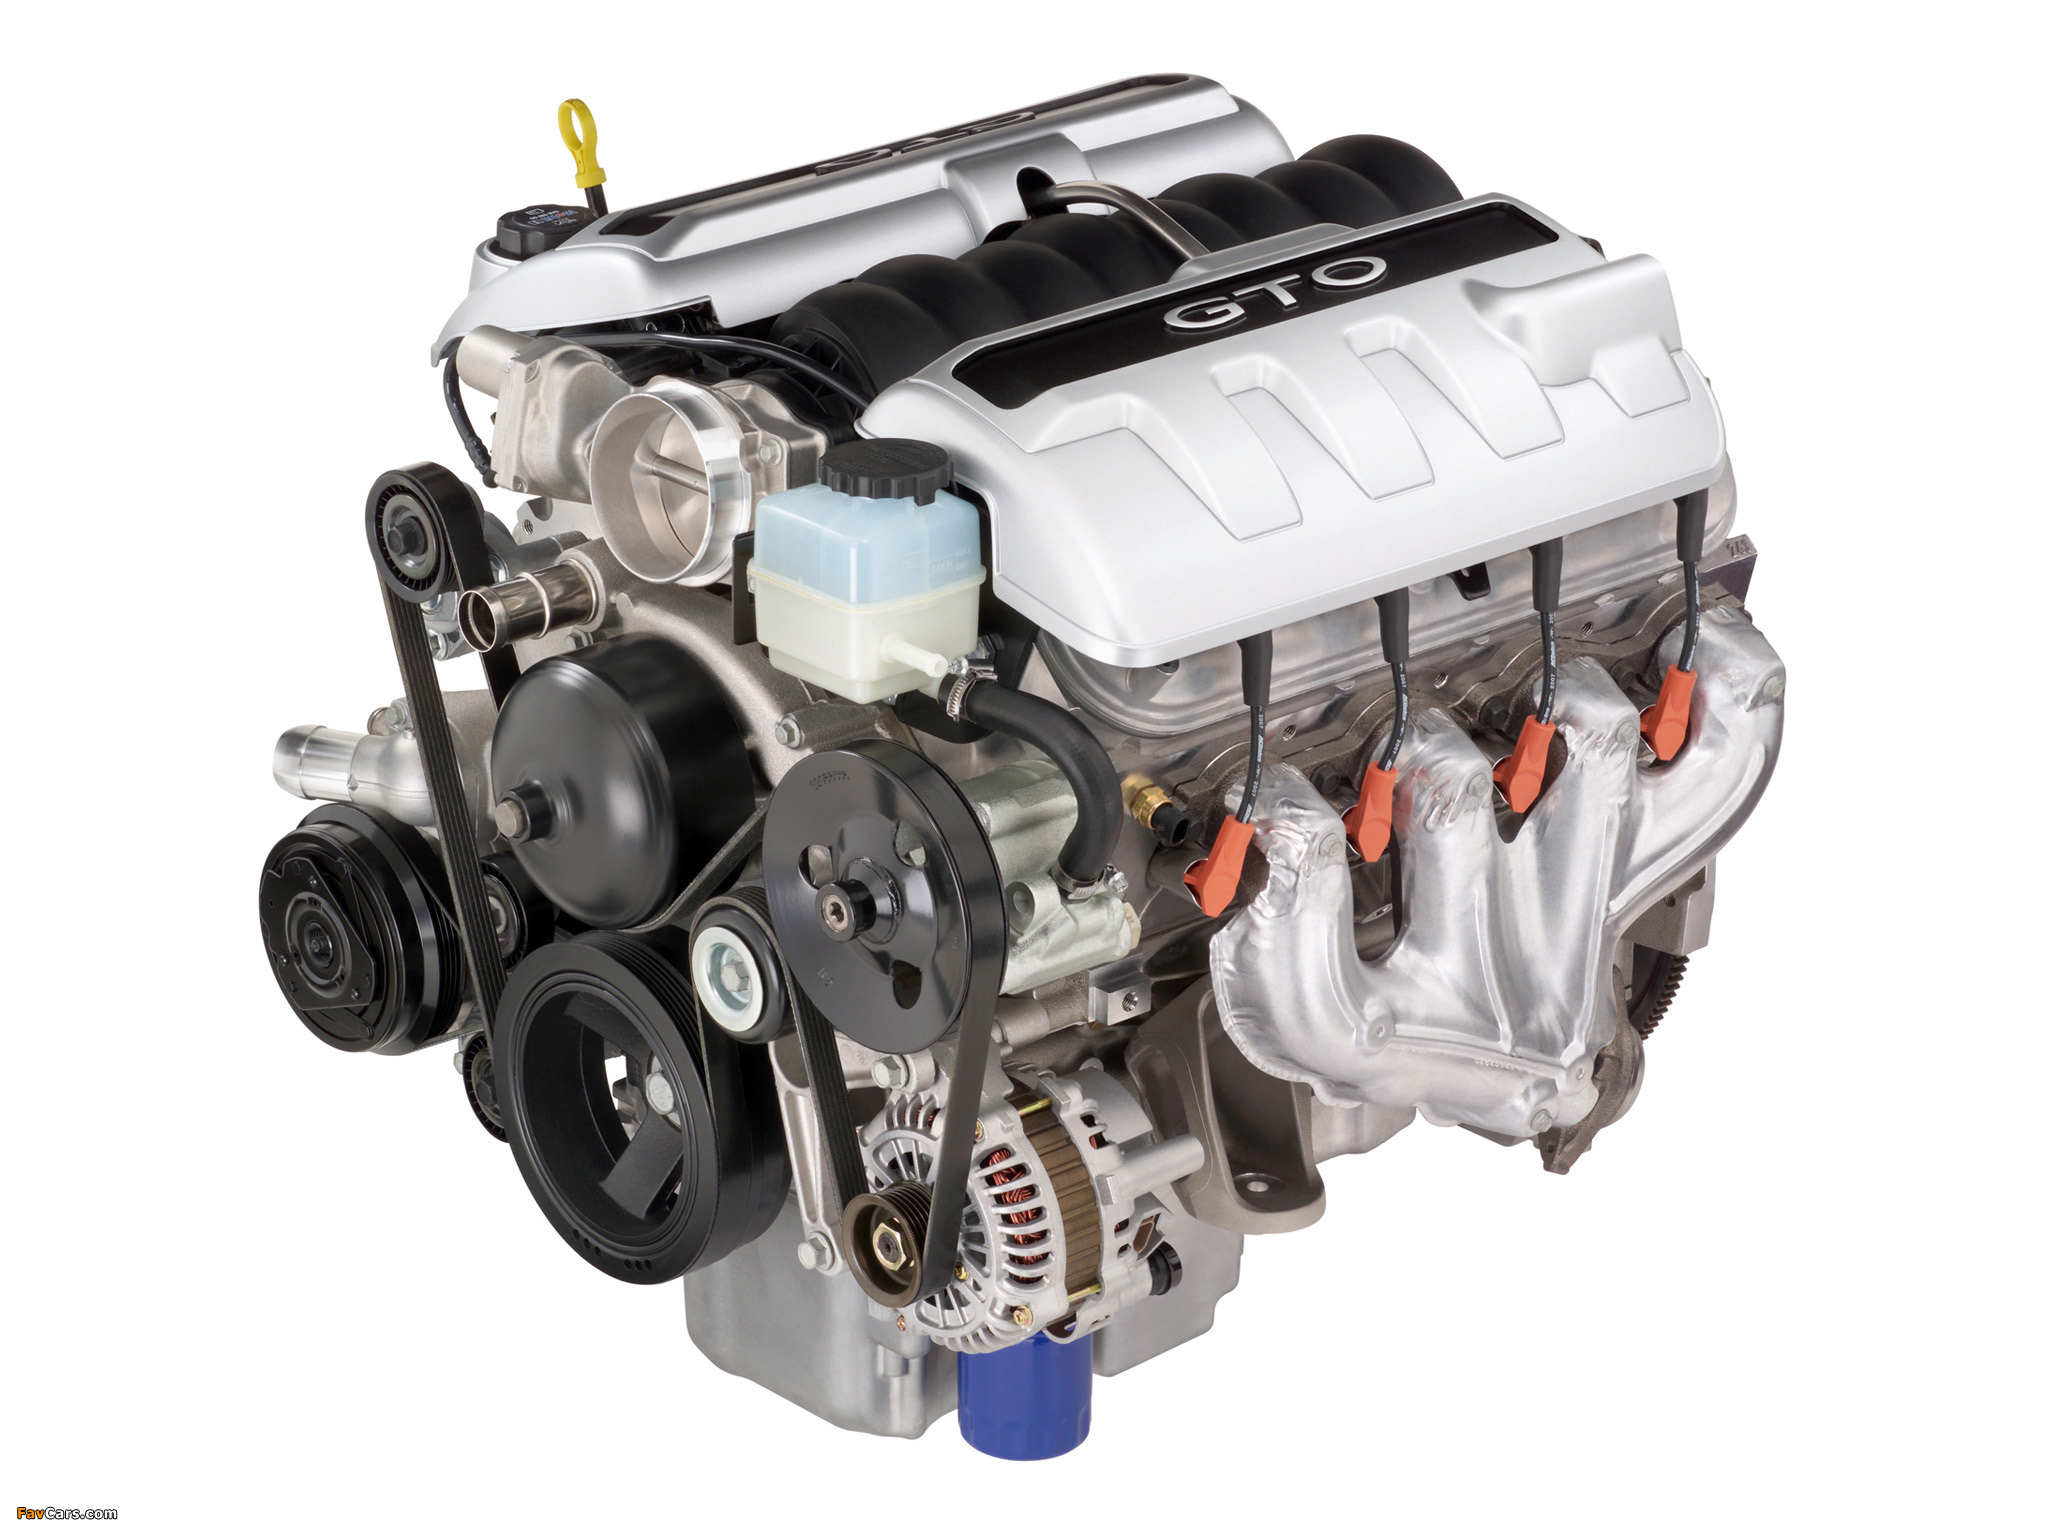 Двигатель 2.5 лс. Chevrolet ls2 двигатель. Двигатель GM Chevrolet l98. Chevrolet 6,2 движок. Chevrolet ls2 engine.